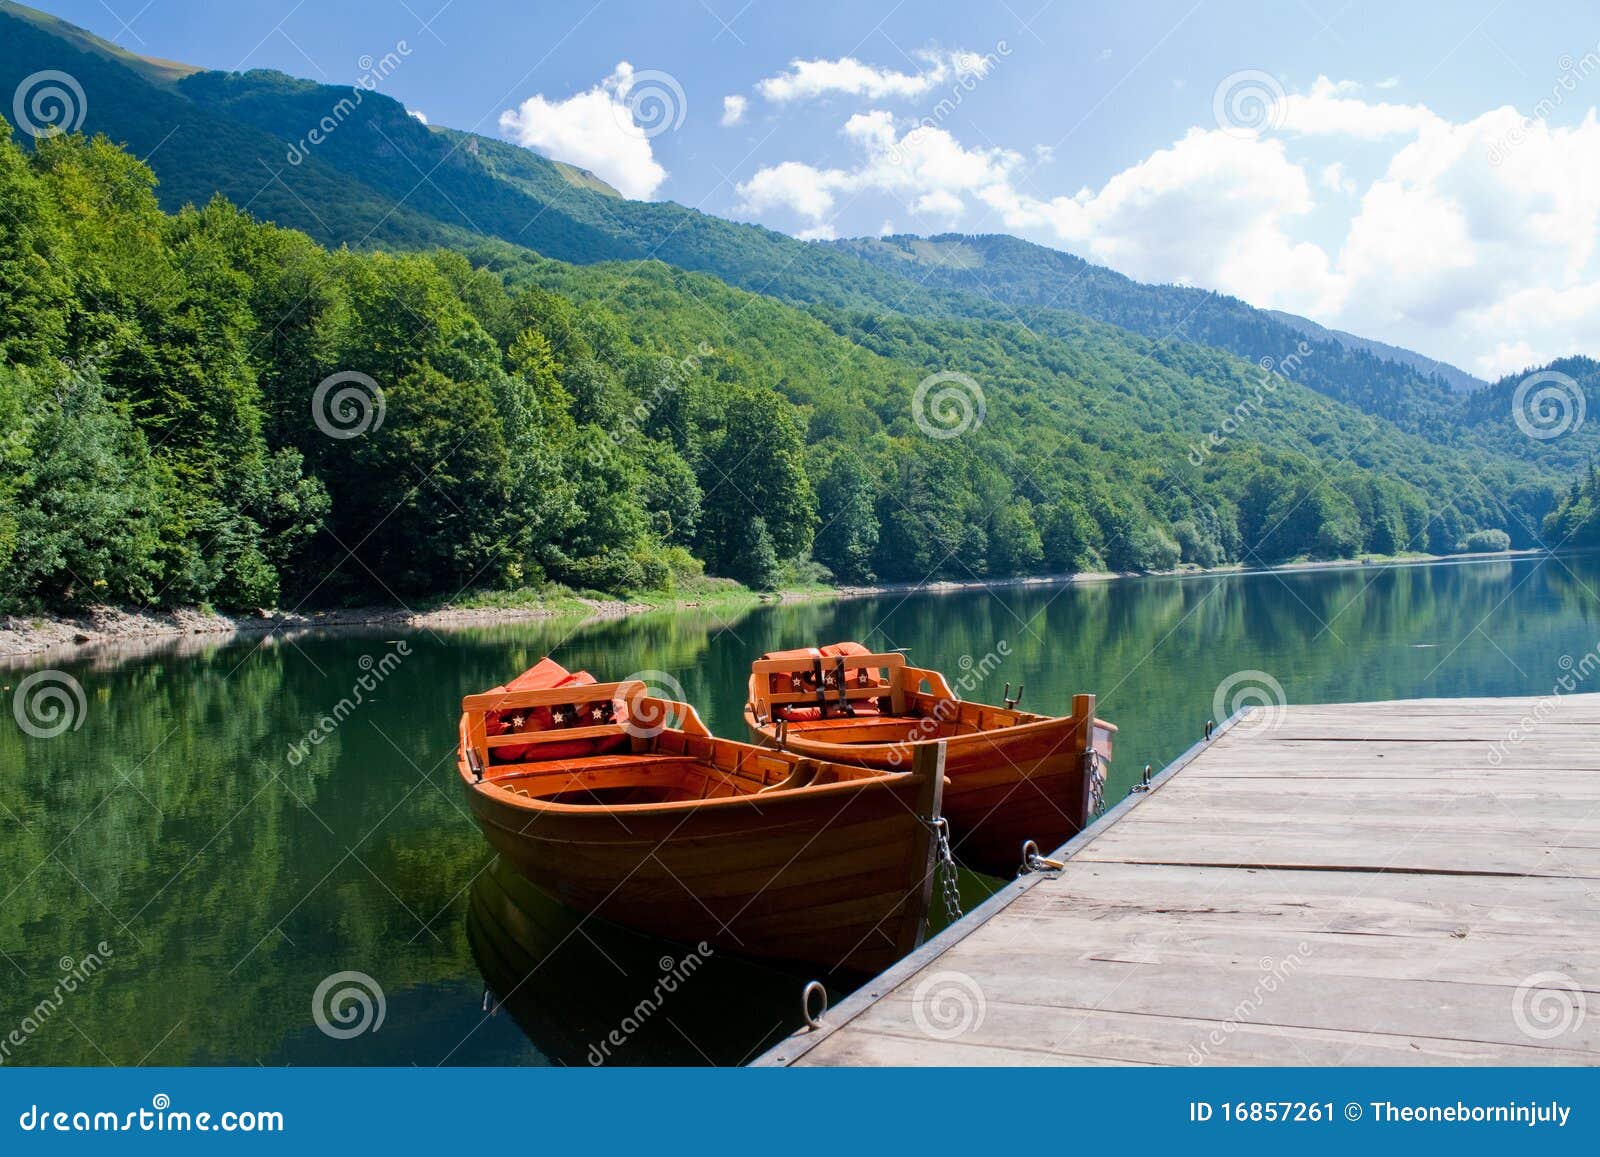 boats in biogradske jezero